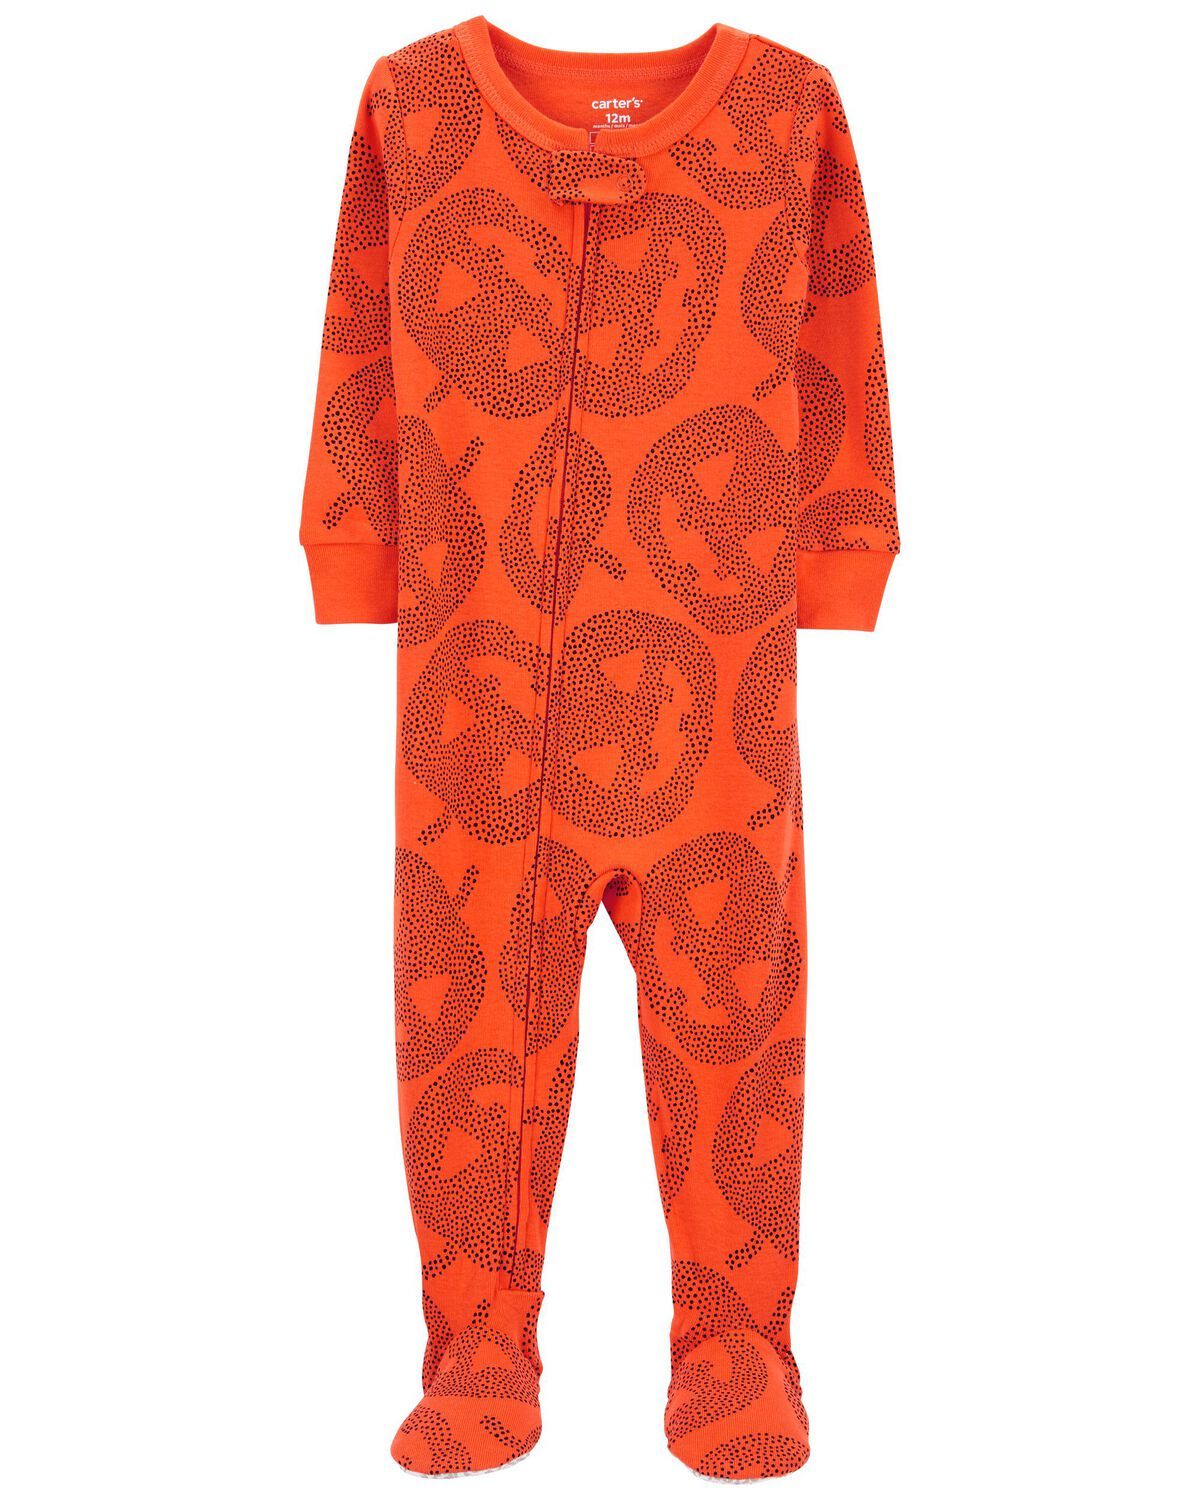 Orange Baby 1-Piece Halloween 100% Snug Fit Cotton Footie Pajamas | carters.com | Carter's